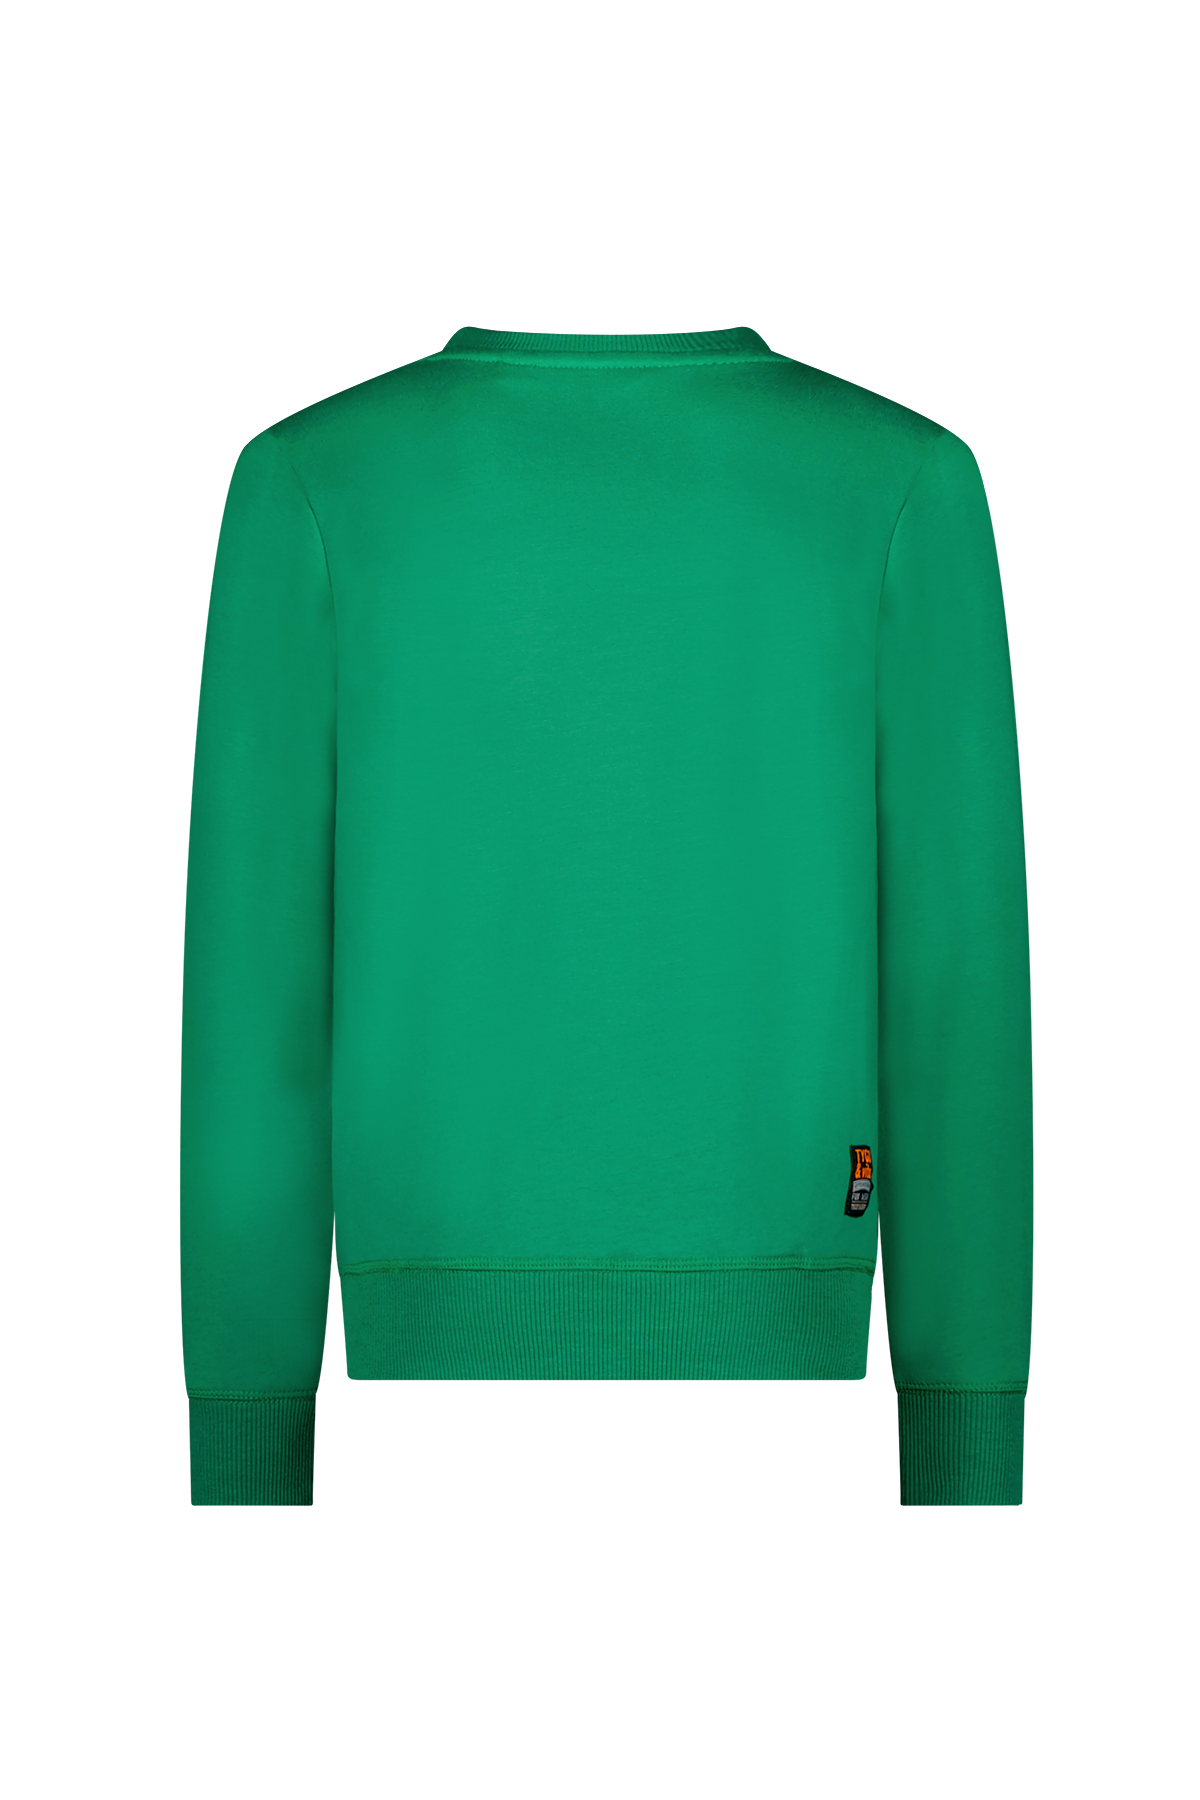 Sweater Tygo  groen